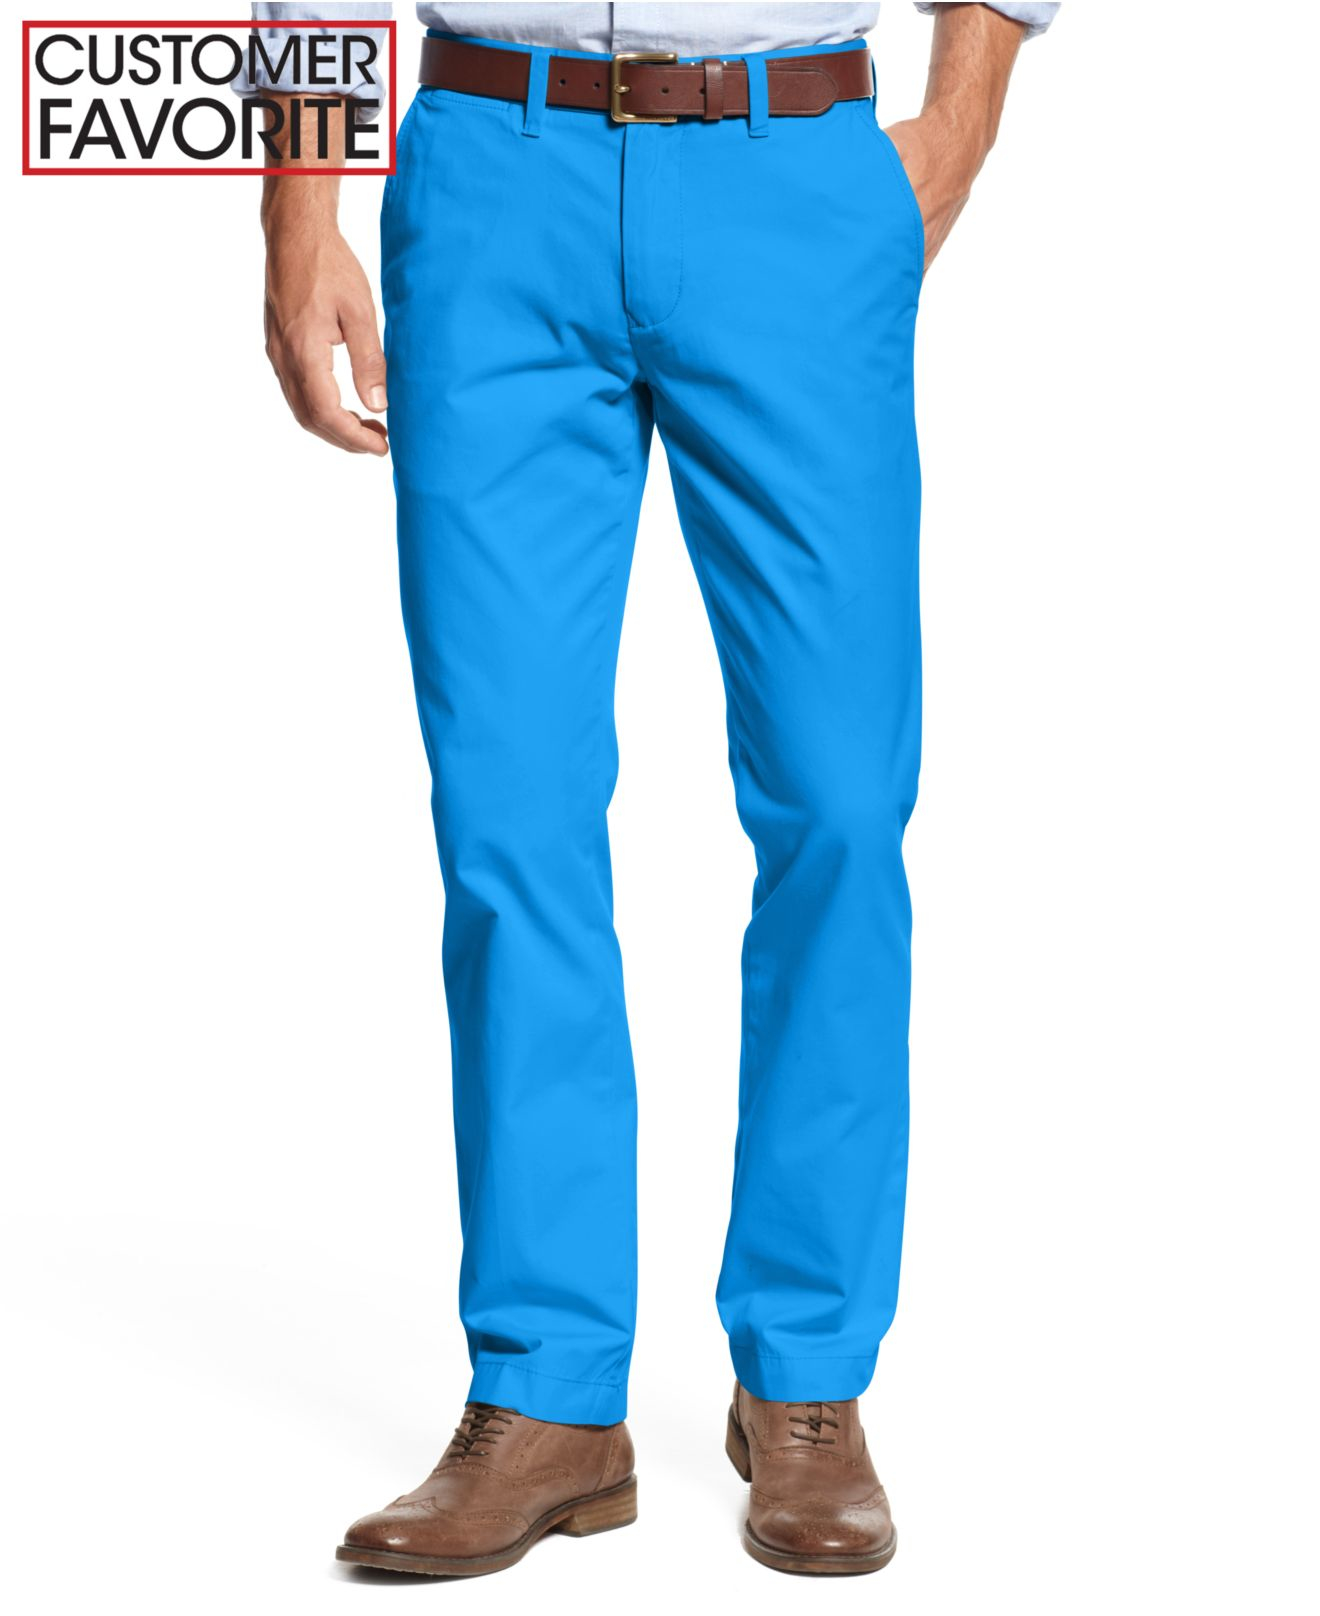 tommy hilfiger blue pants